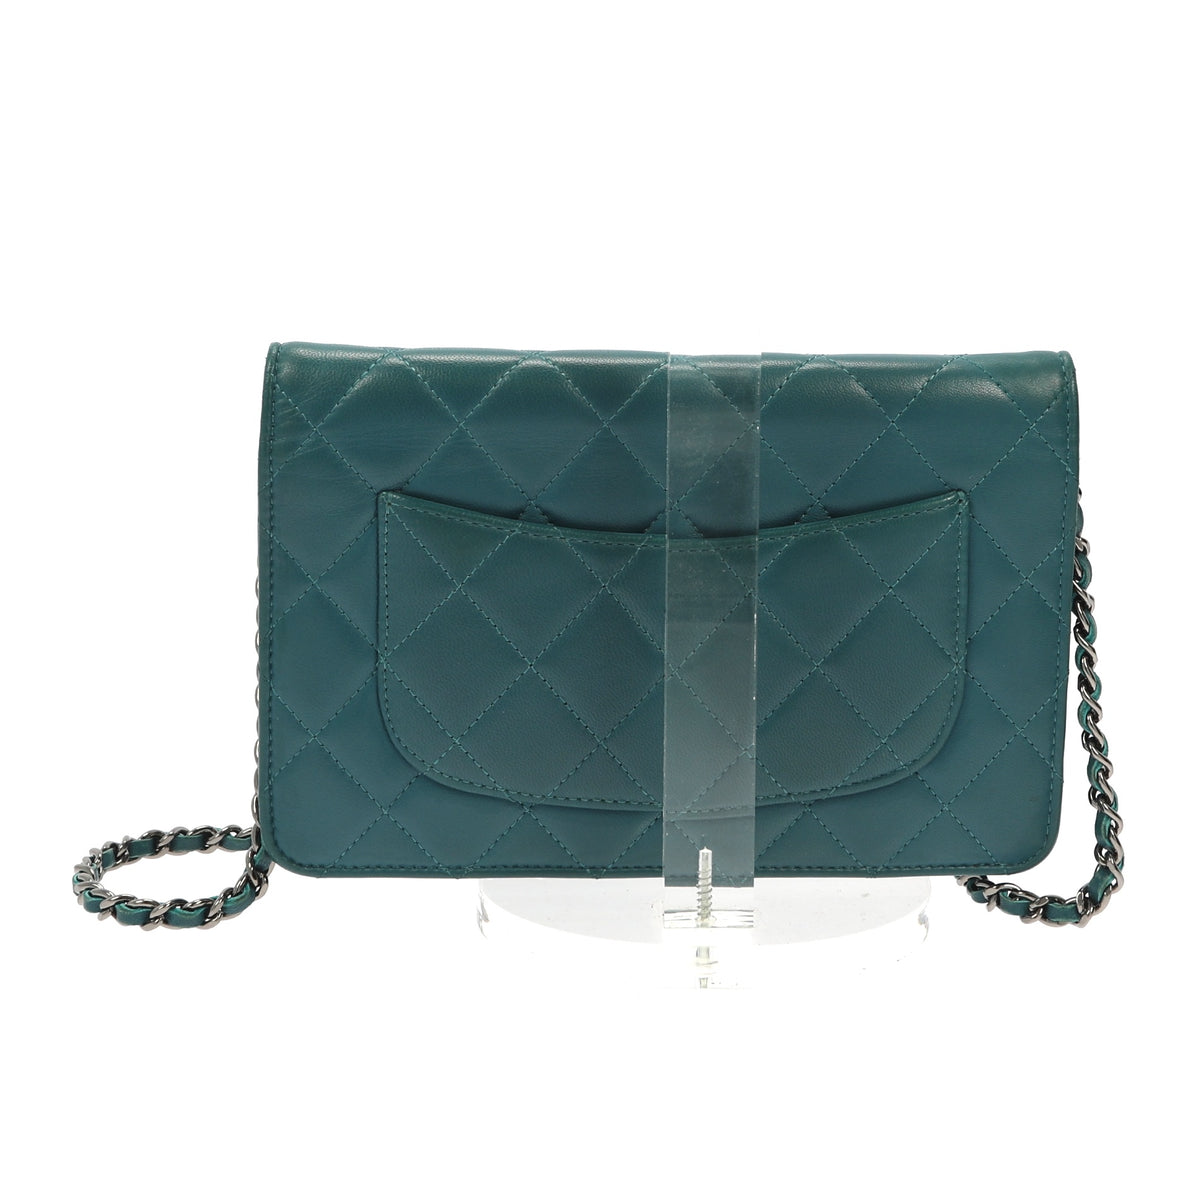 Chanel Timeless Gradient Metallic Quilted Calfskin Chain Wristlet Handbag